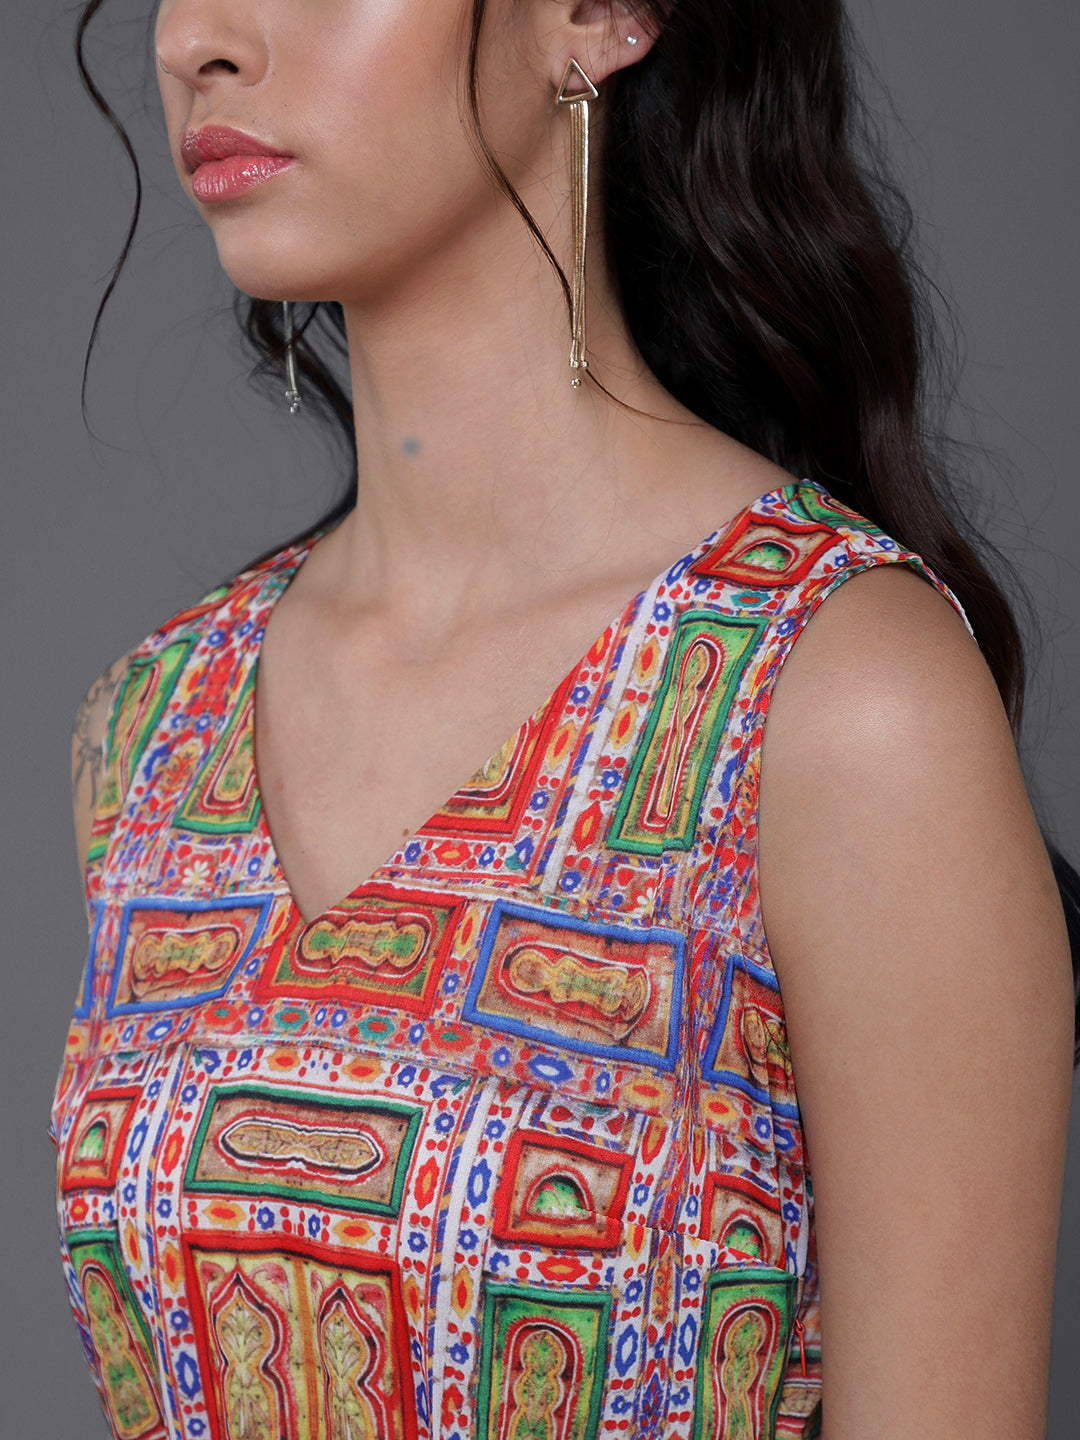 Multicolor Printed Slit Maxi Dress